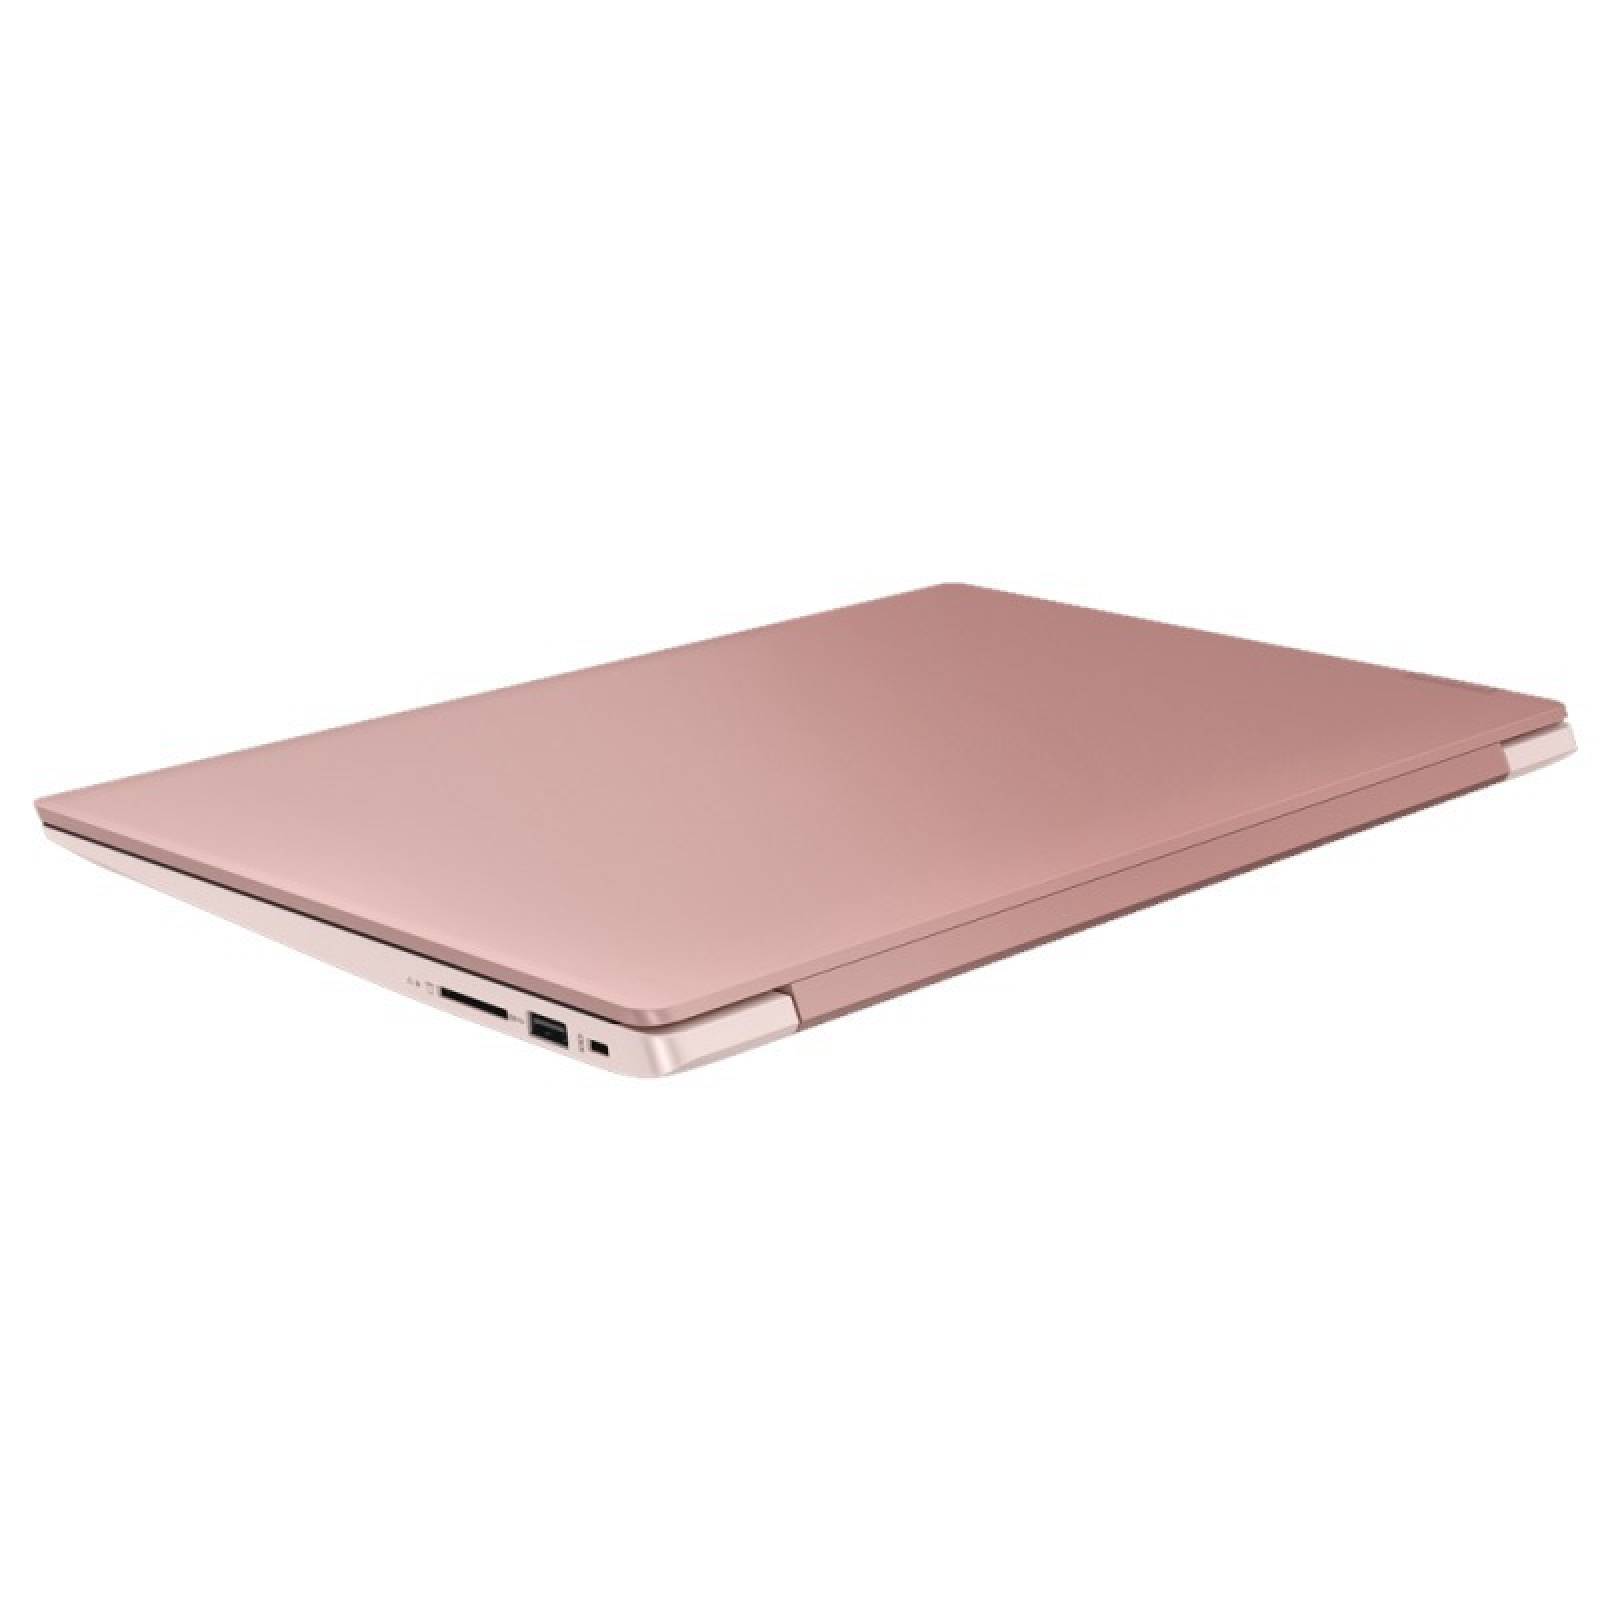 Laptop Lenovo IdeaPad 330S-14IKB 14 I3-8130U ROSA